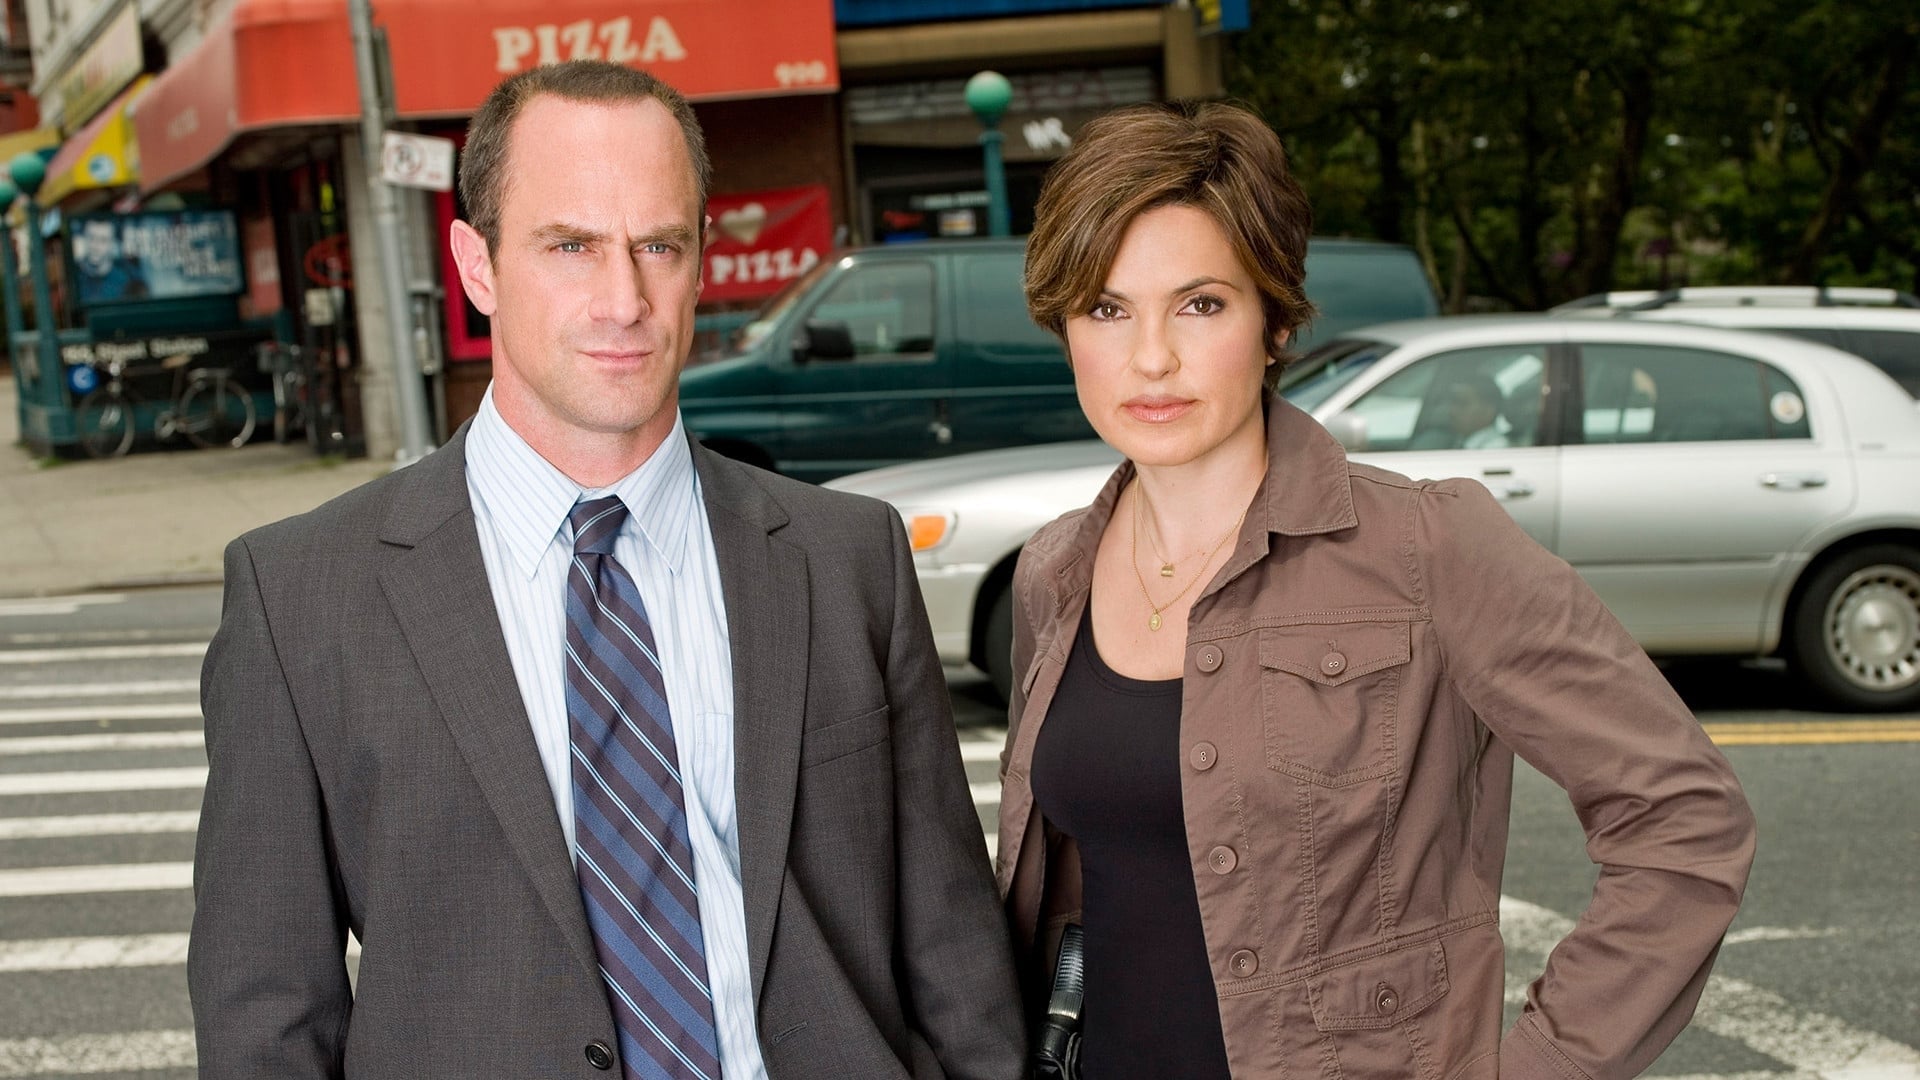 Law & Order: Special Victims Unit - Season 7